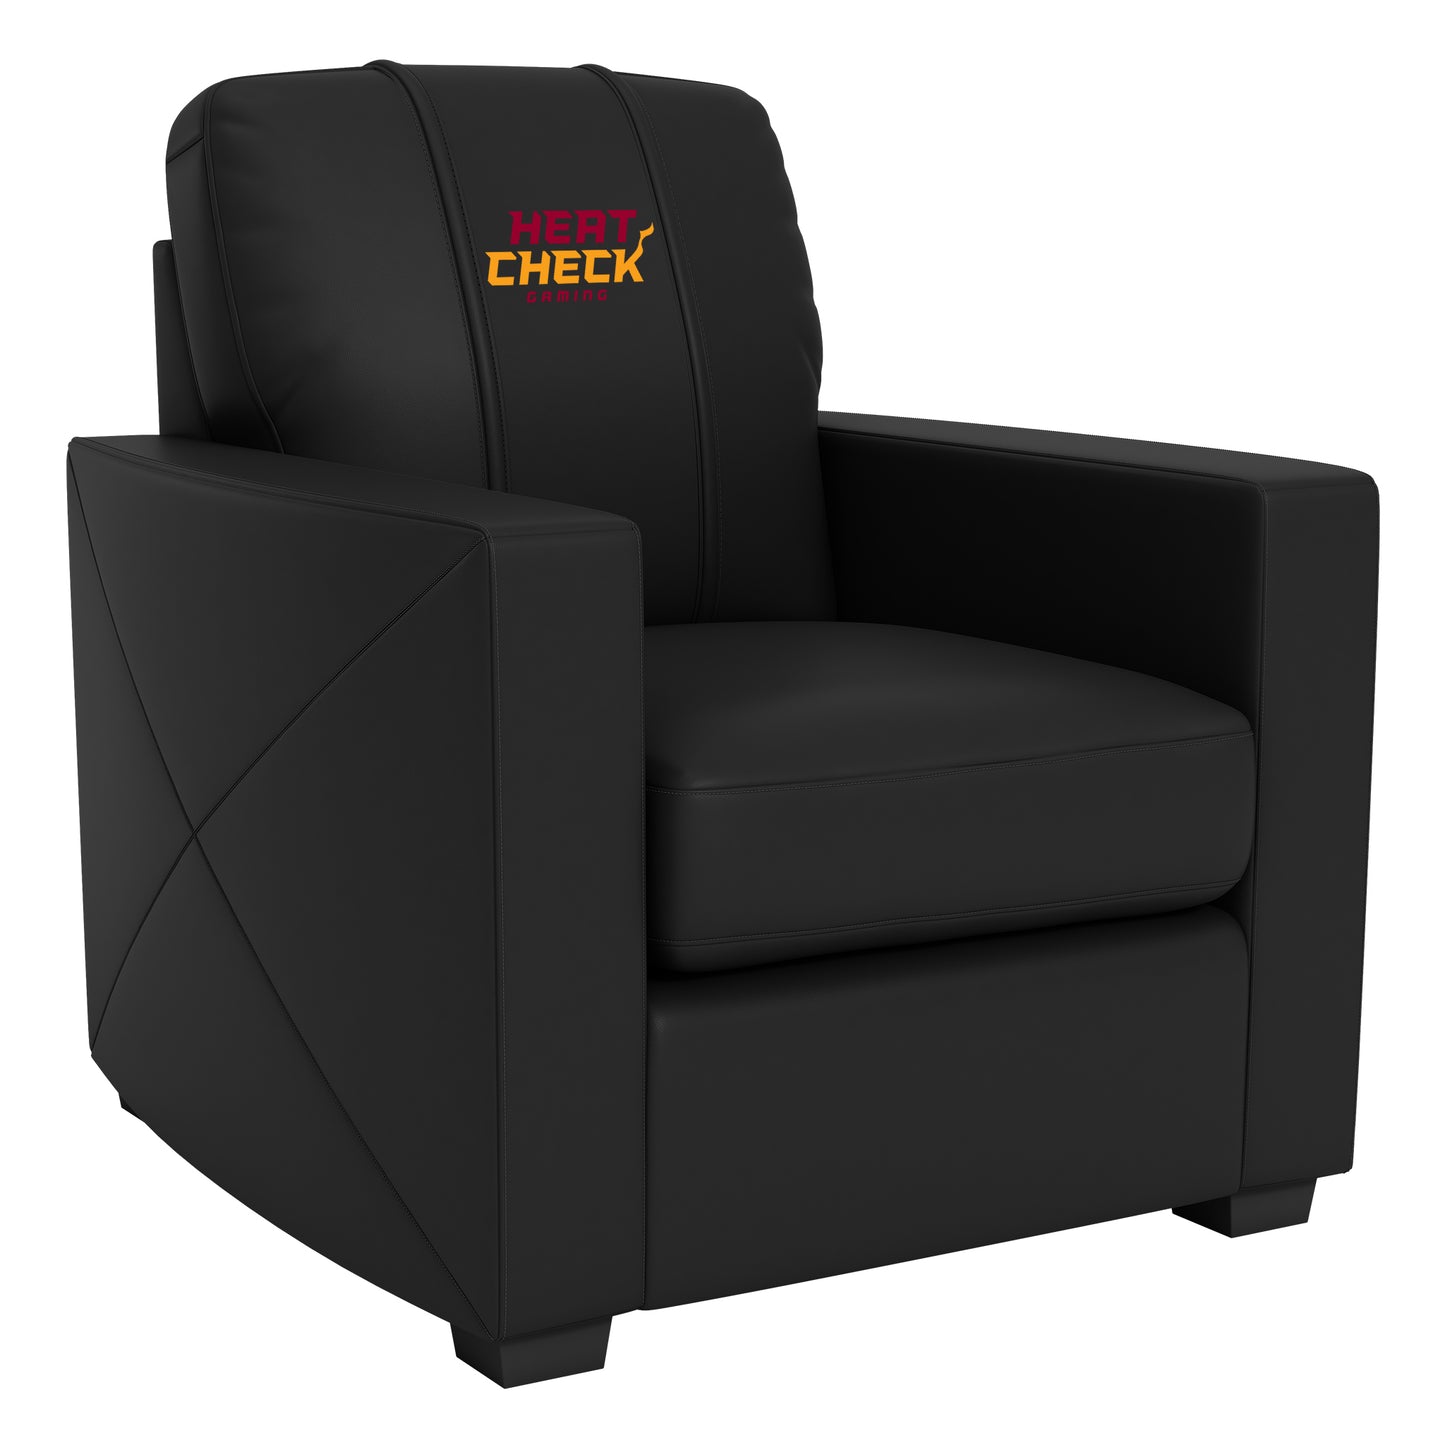 Silver Club Chair Heat Check Gaming Wordmark